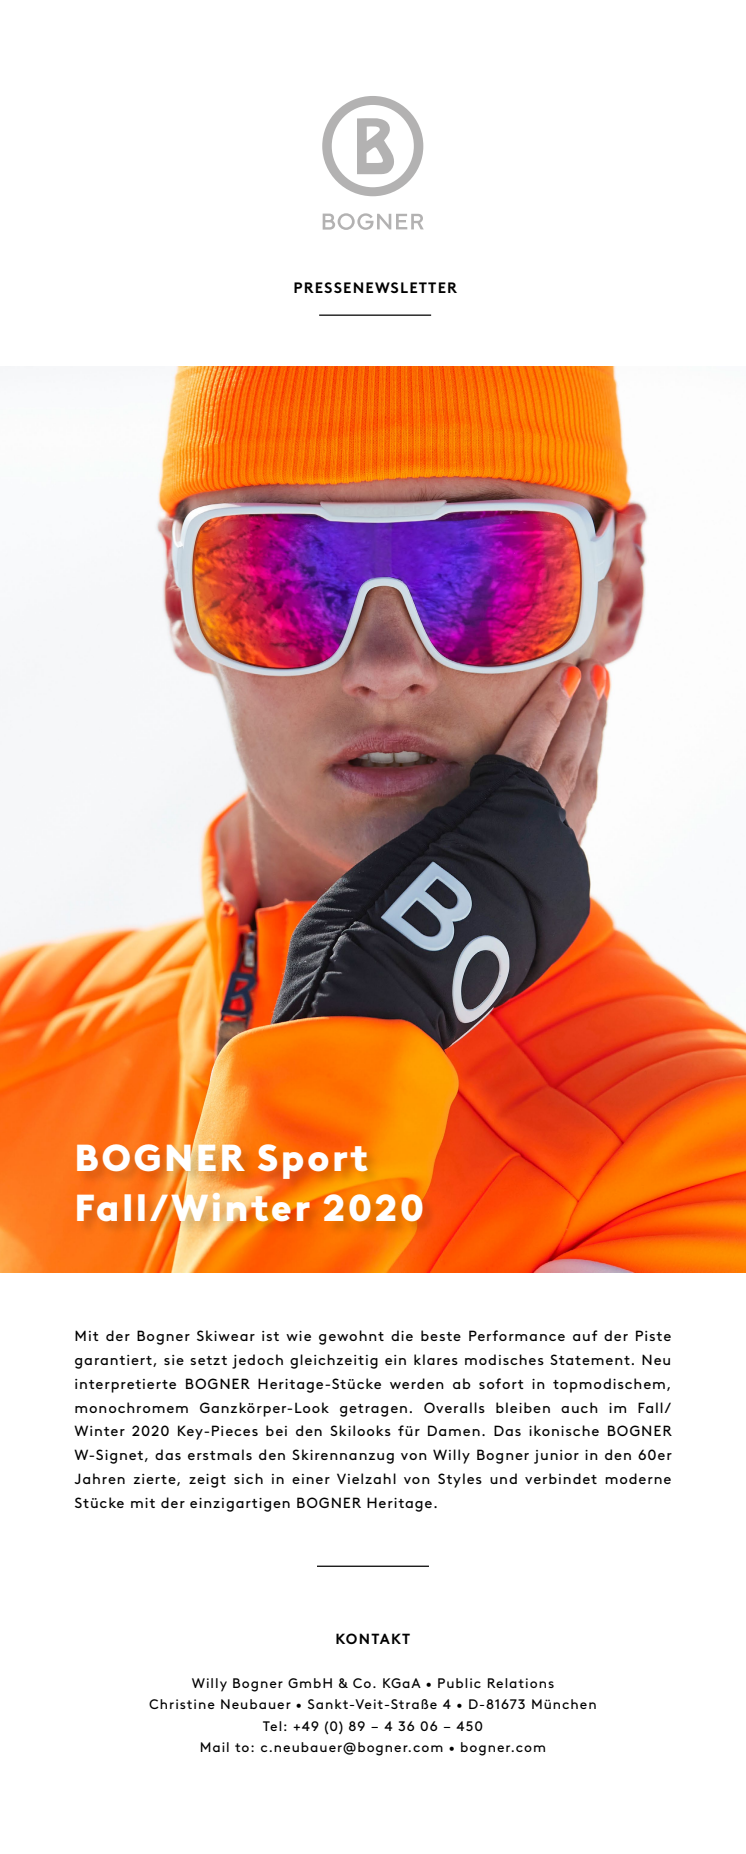 BOGNER SPORT Fall/Winter 2020